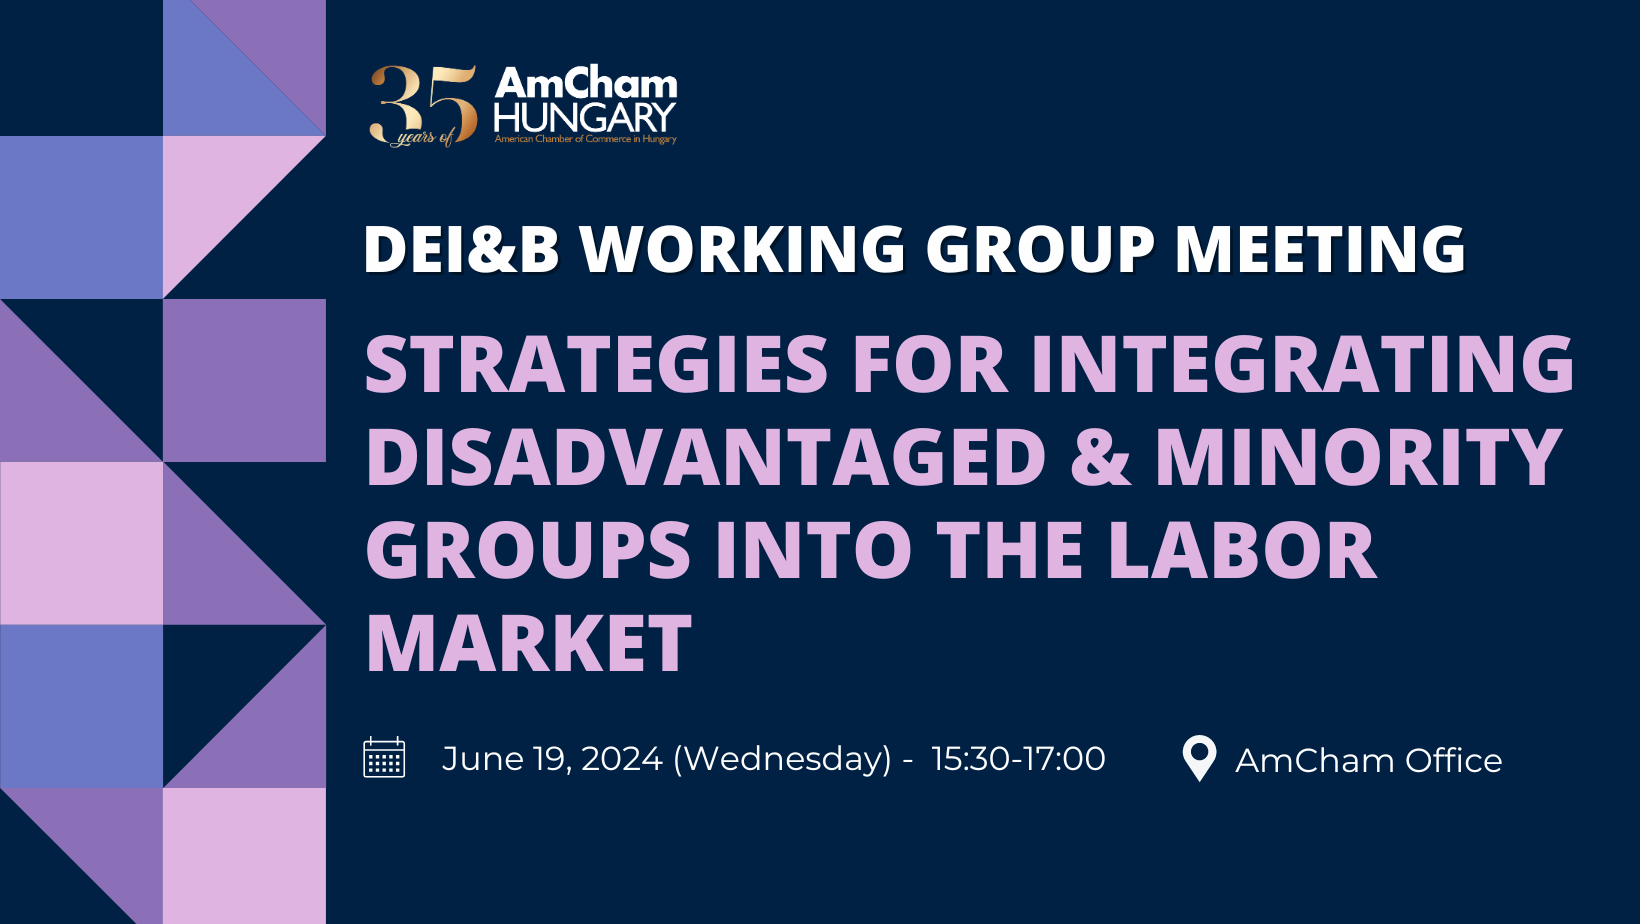 AmCham DEI&B meeting on integrating disadvantaged and minority groups into the labor market